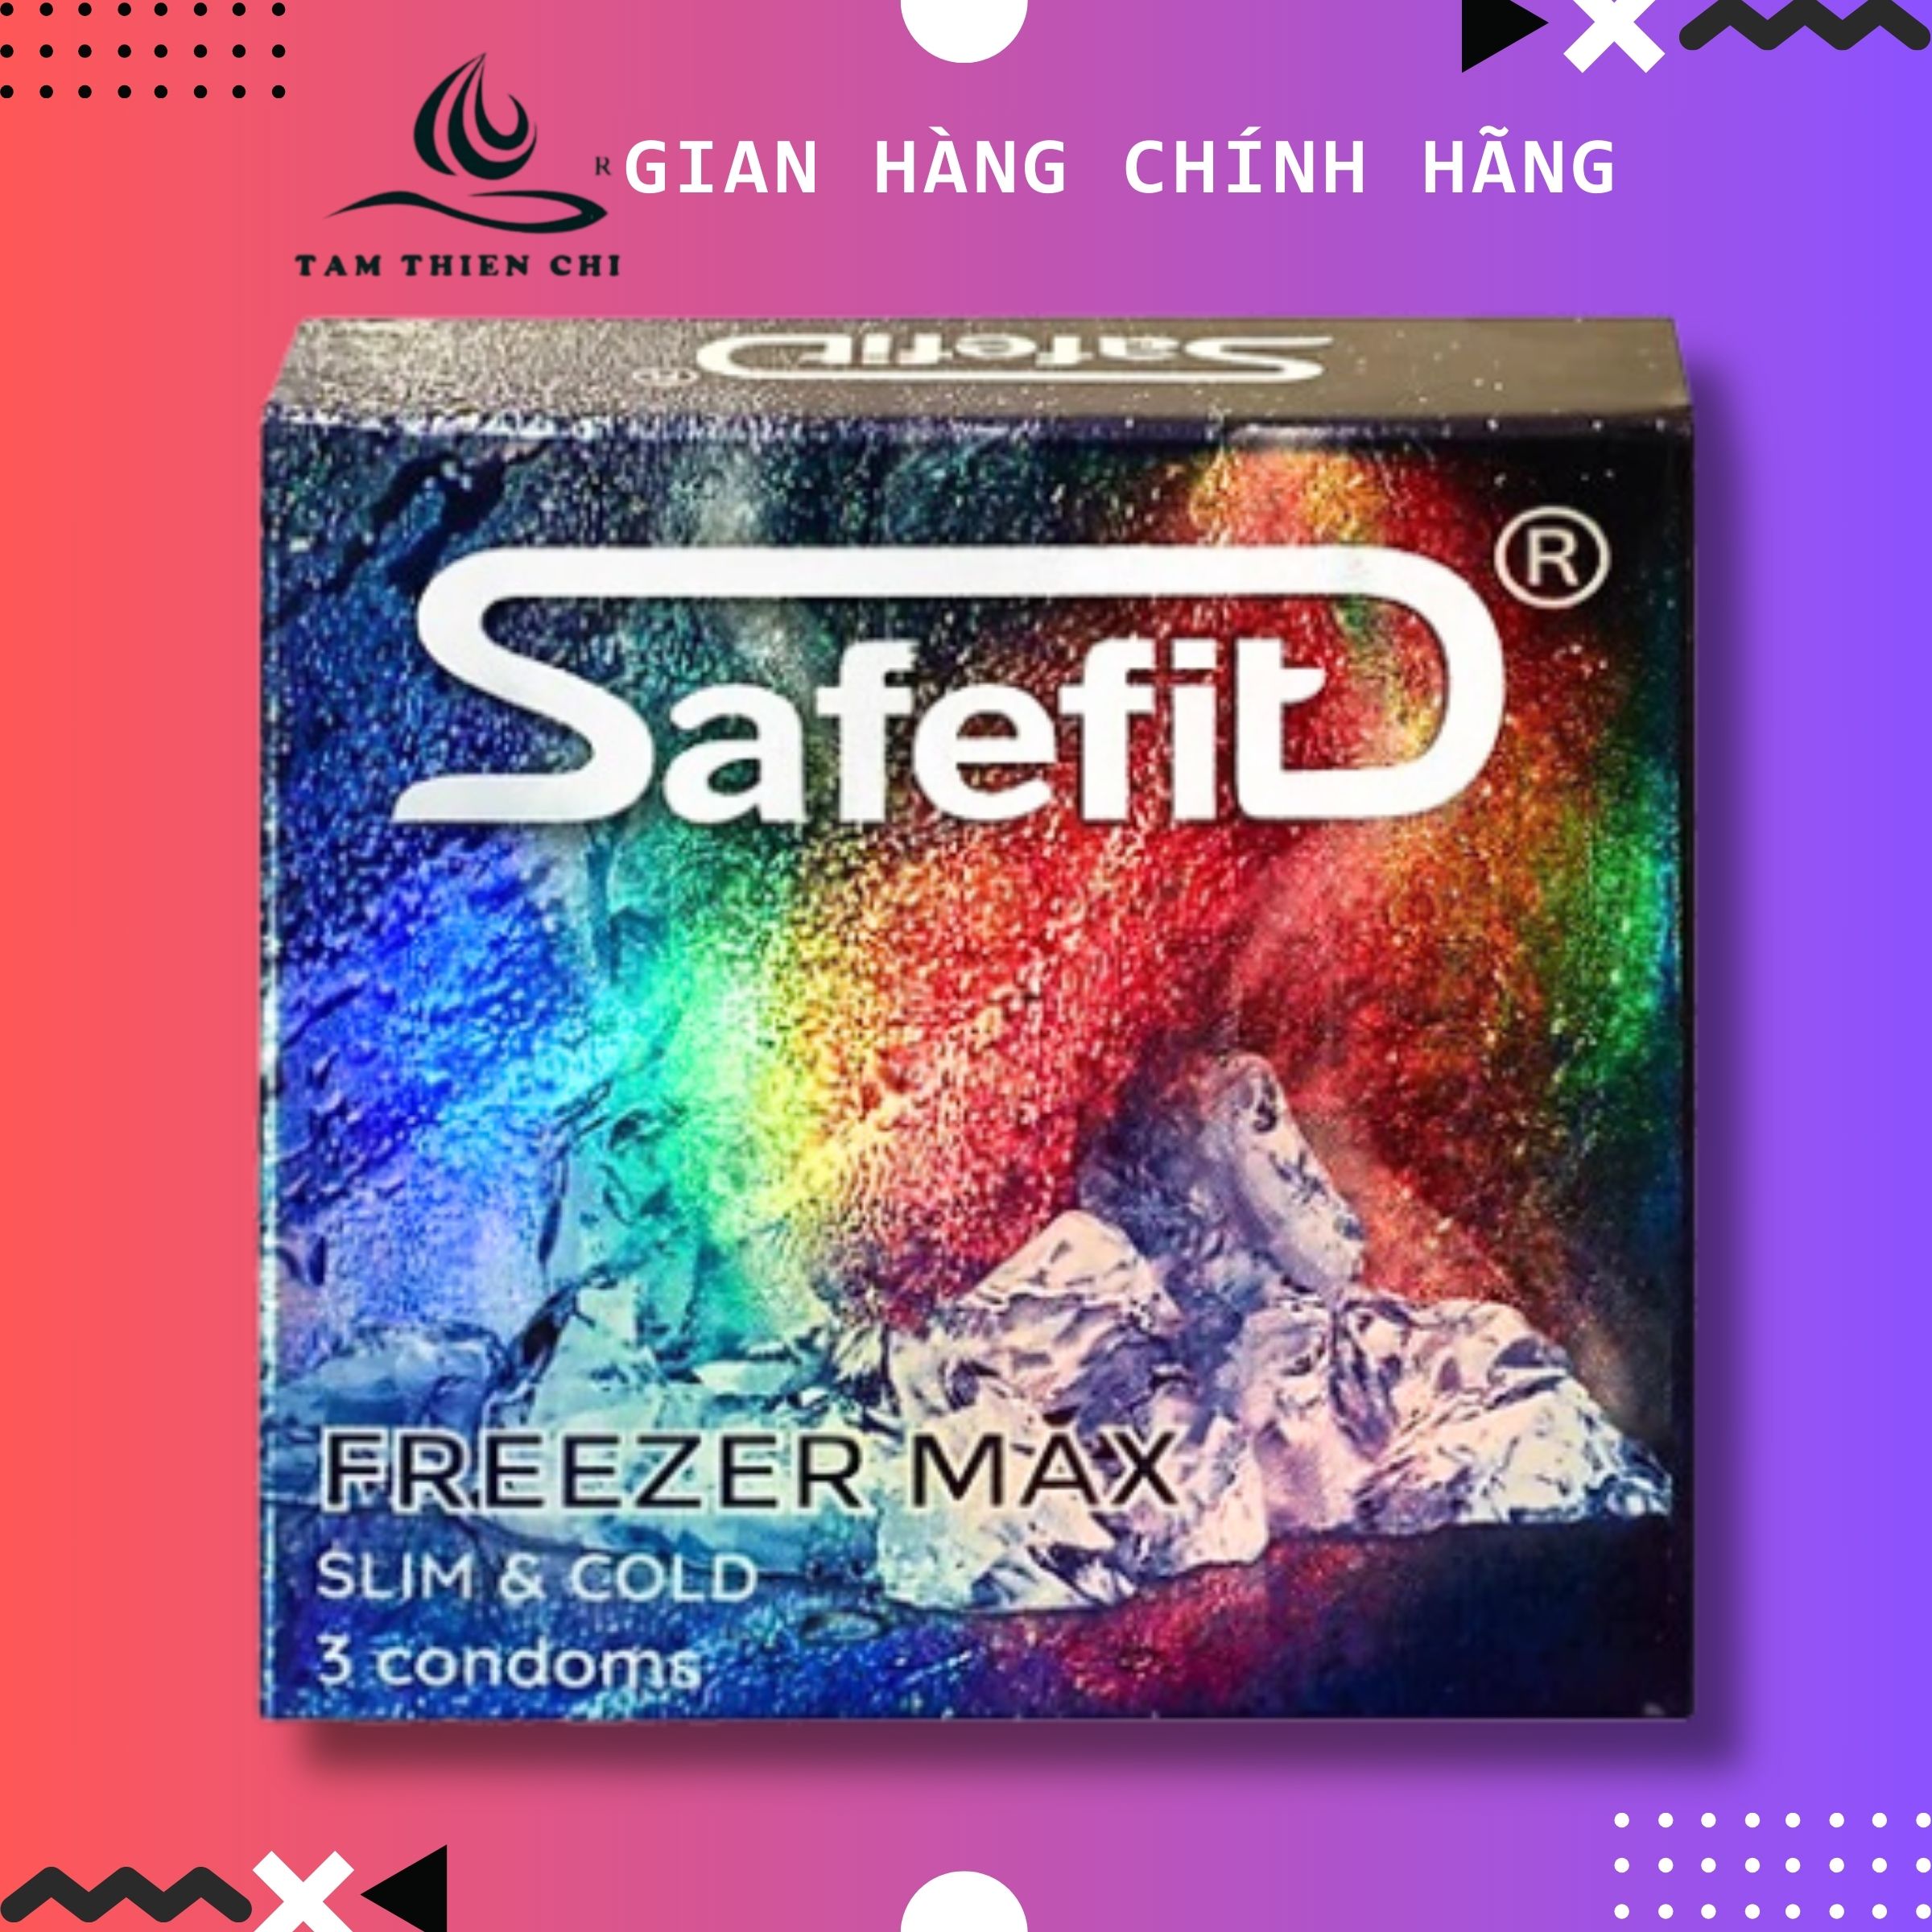 Bao cao su Siêu mỏng Mát lạnh Safefit Freezer Max hộp 3 cái